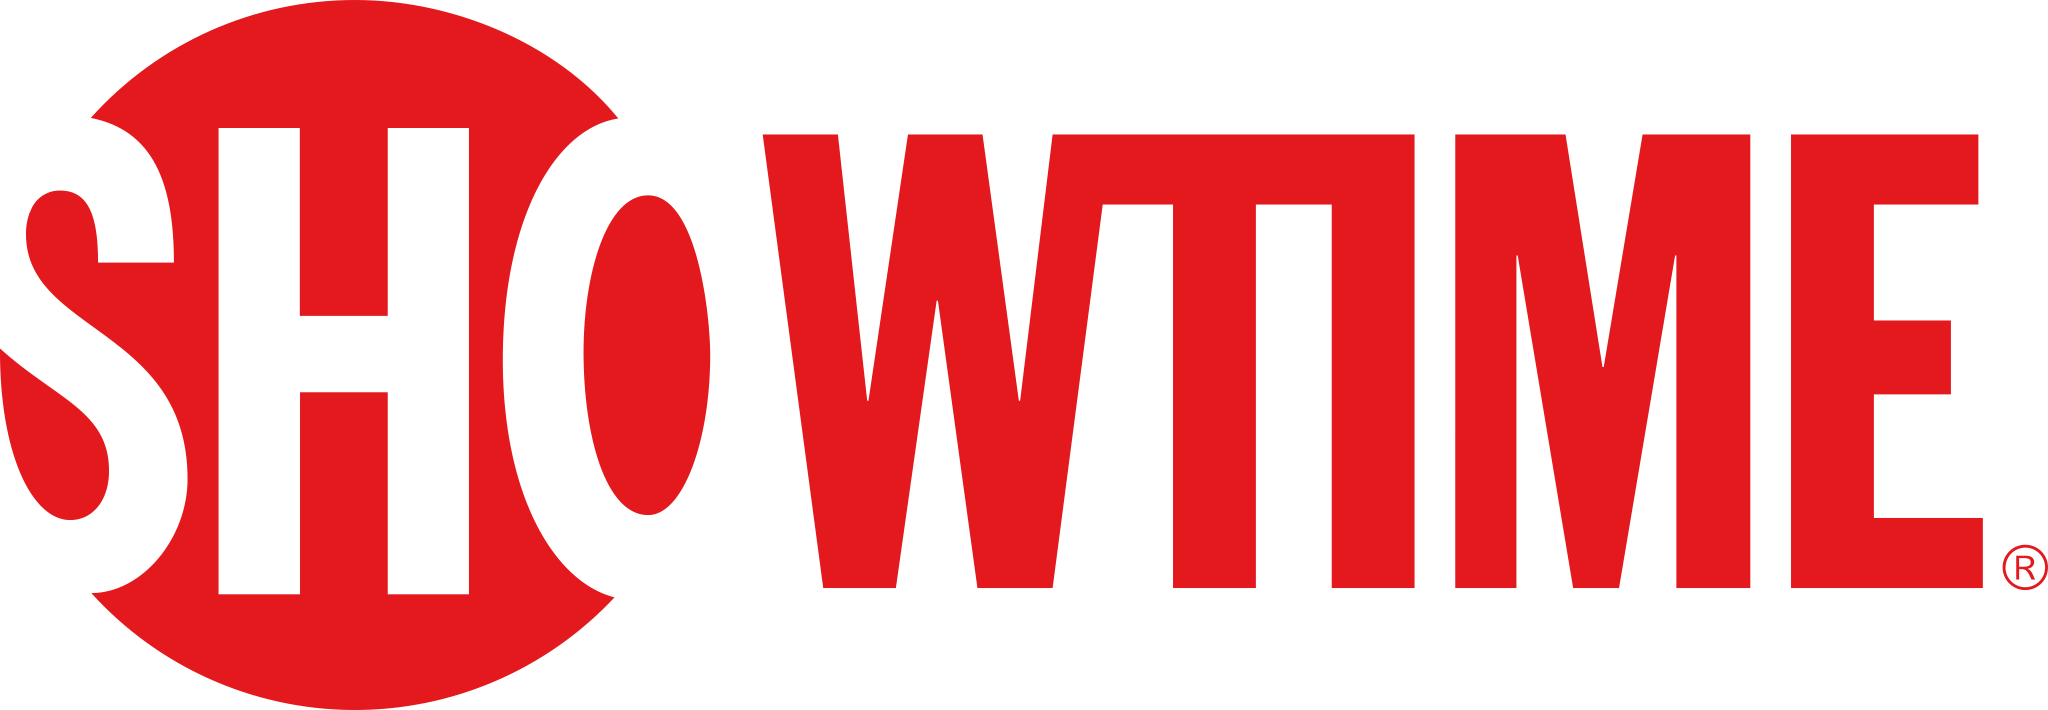 SHOWTIME Logo - PNG e Vetor - Download de Logo